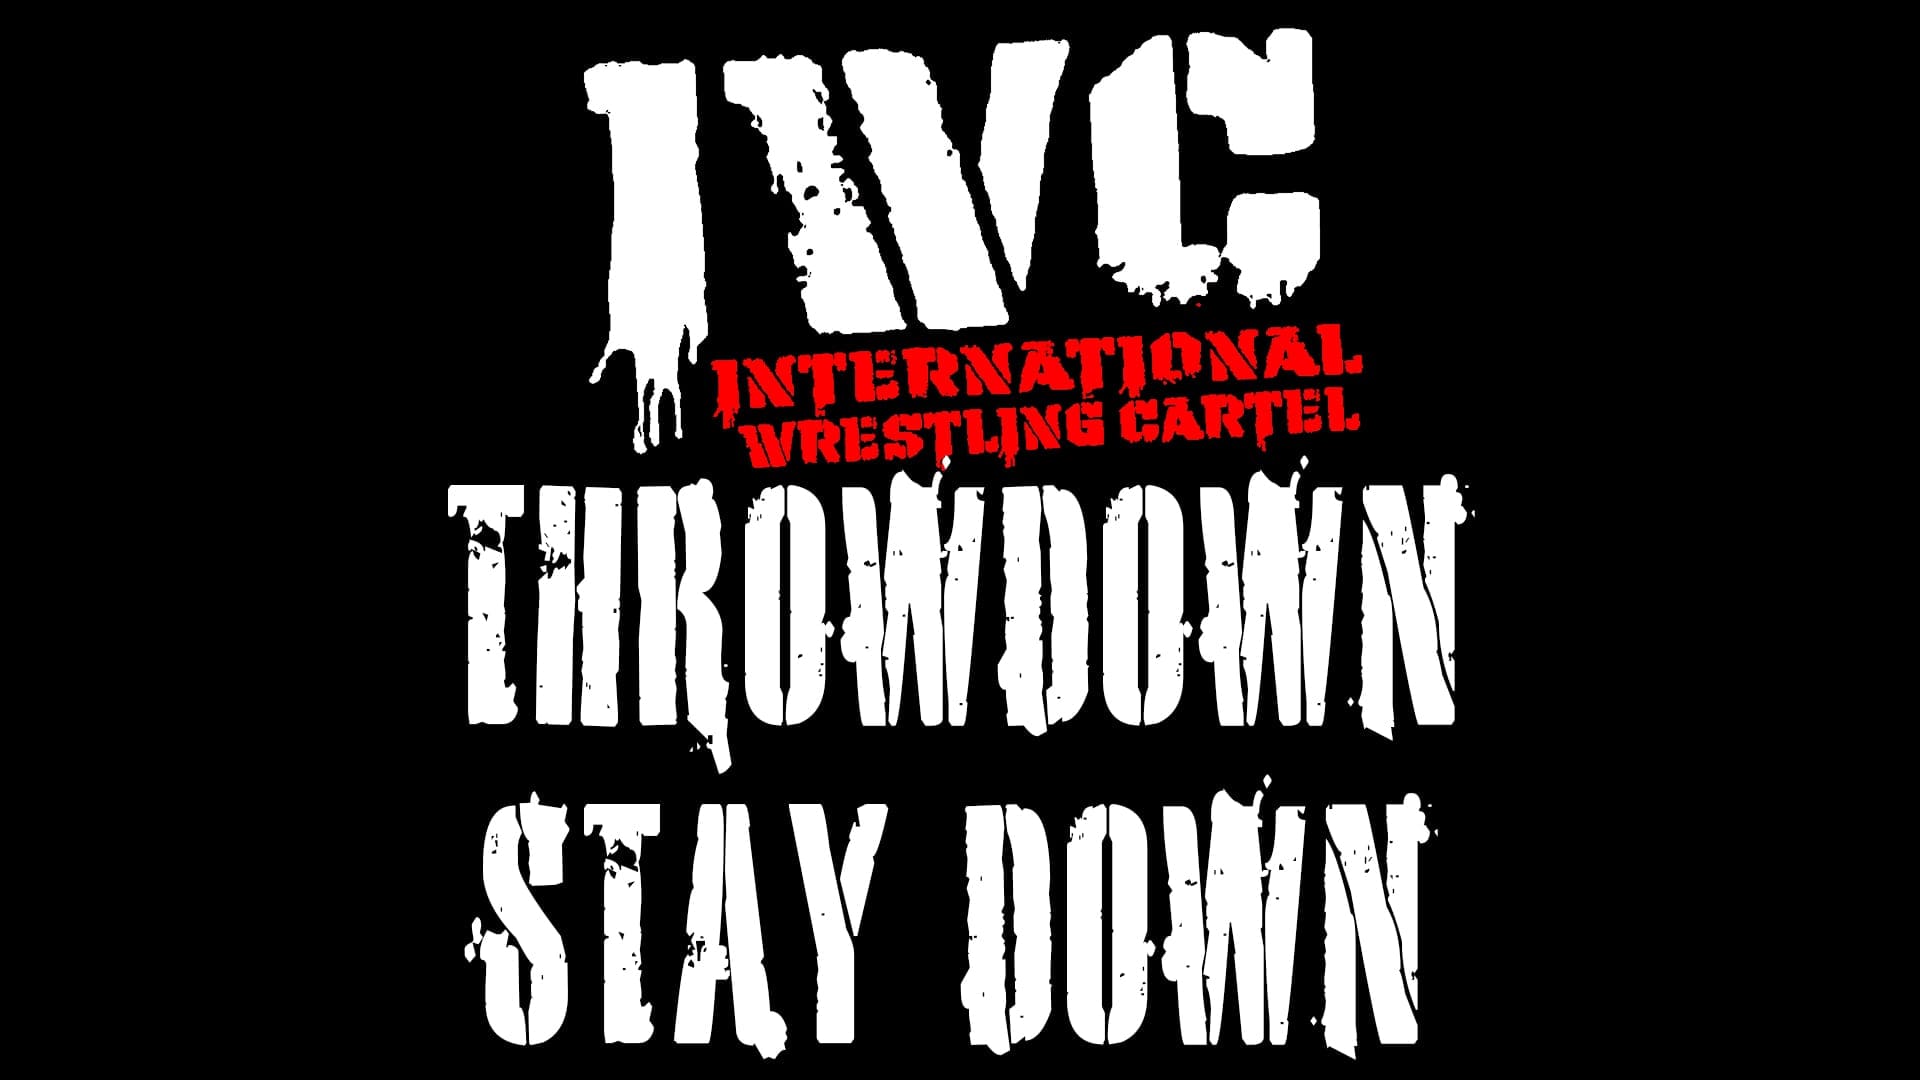 Throwdown Stay Down